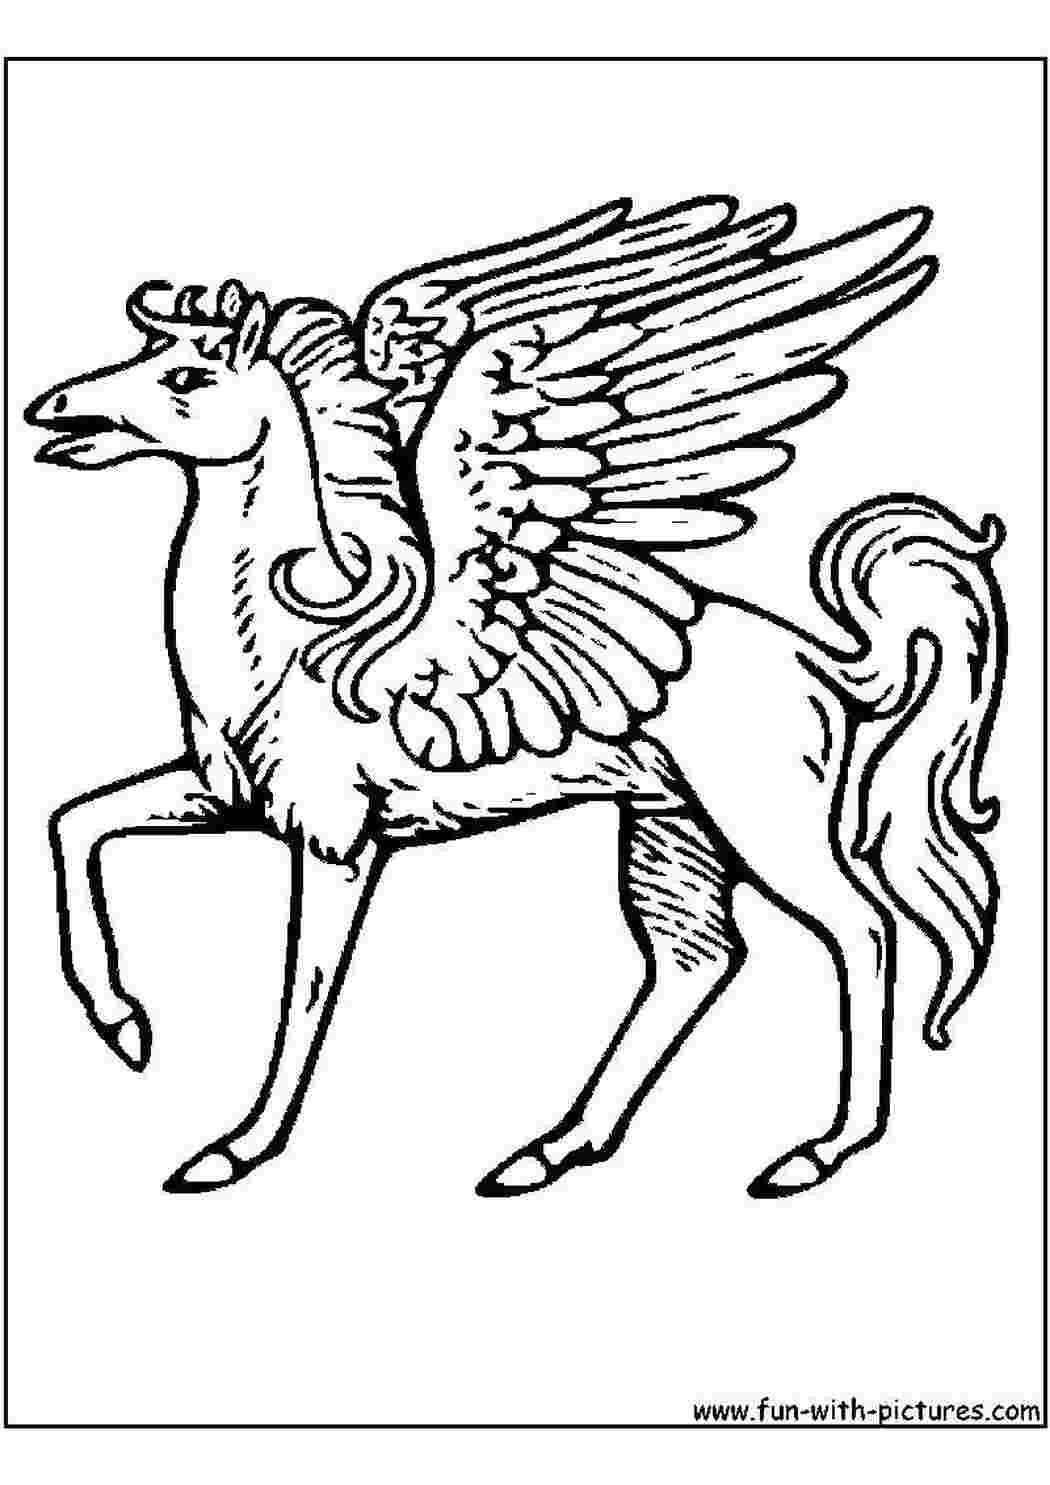 Раскраски Крылья с перьями и конь раскраски конь, крылья